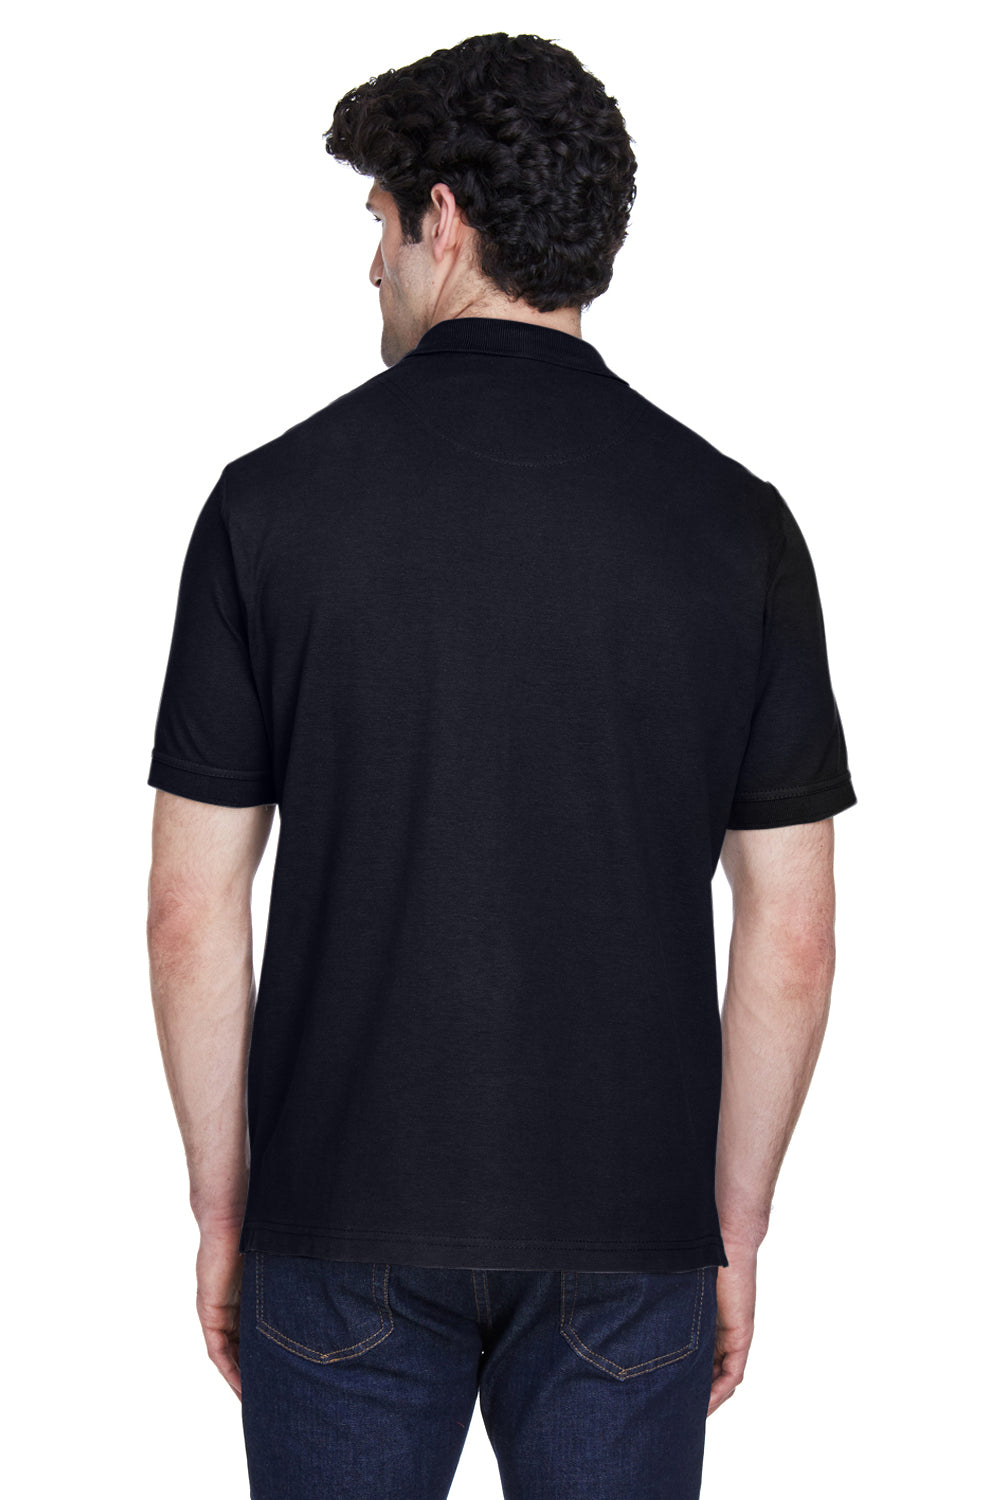 UltraClub 8535 Mens Classic Short Sleeve Polo Shirt Black Back